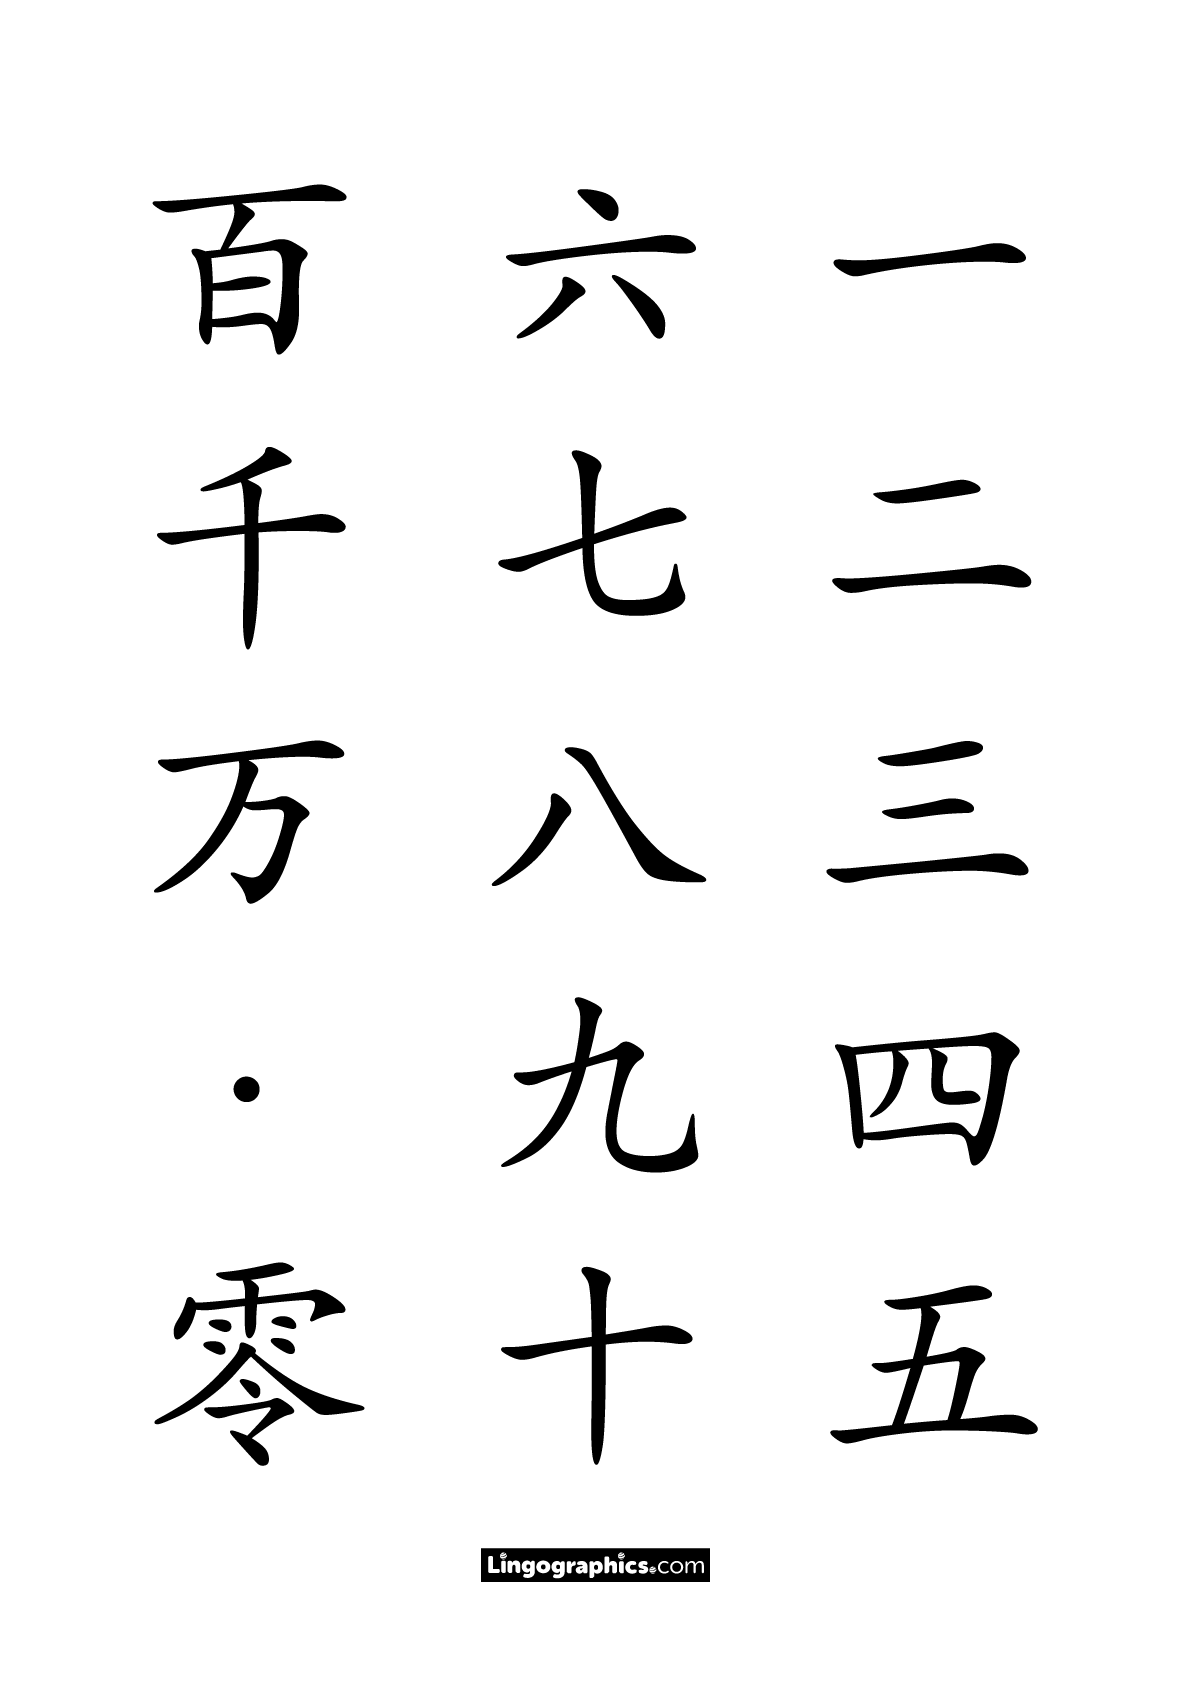 Kanji for Numbers 23 – 230,23 and Zero - Lingographics